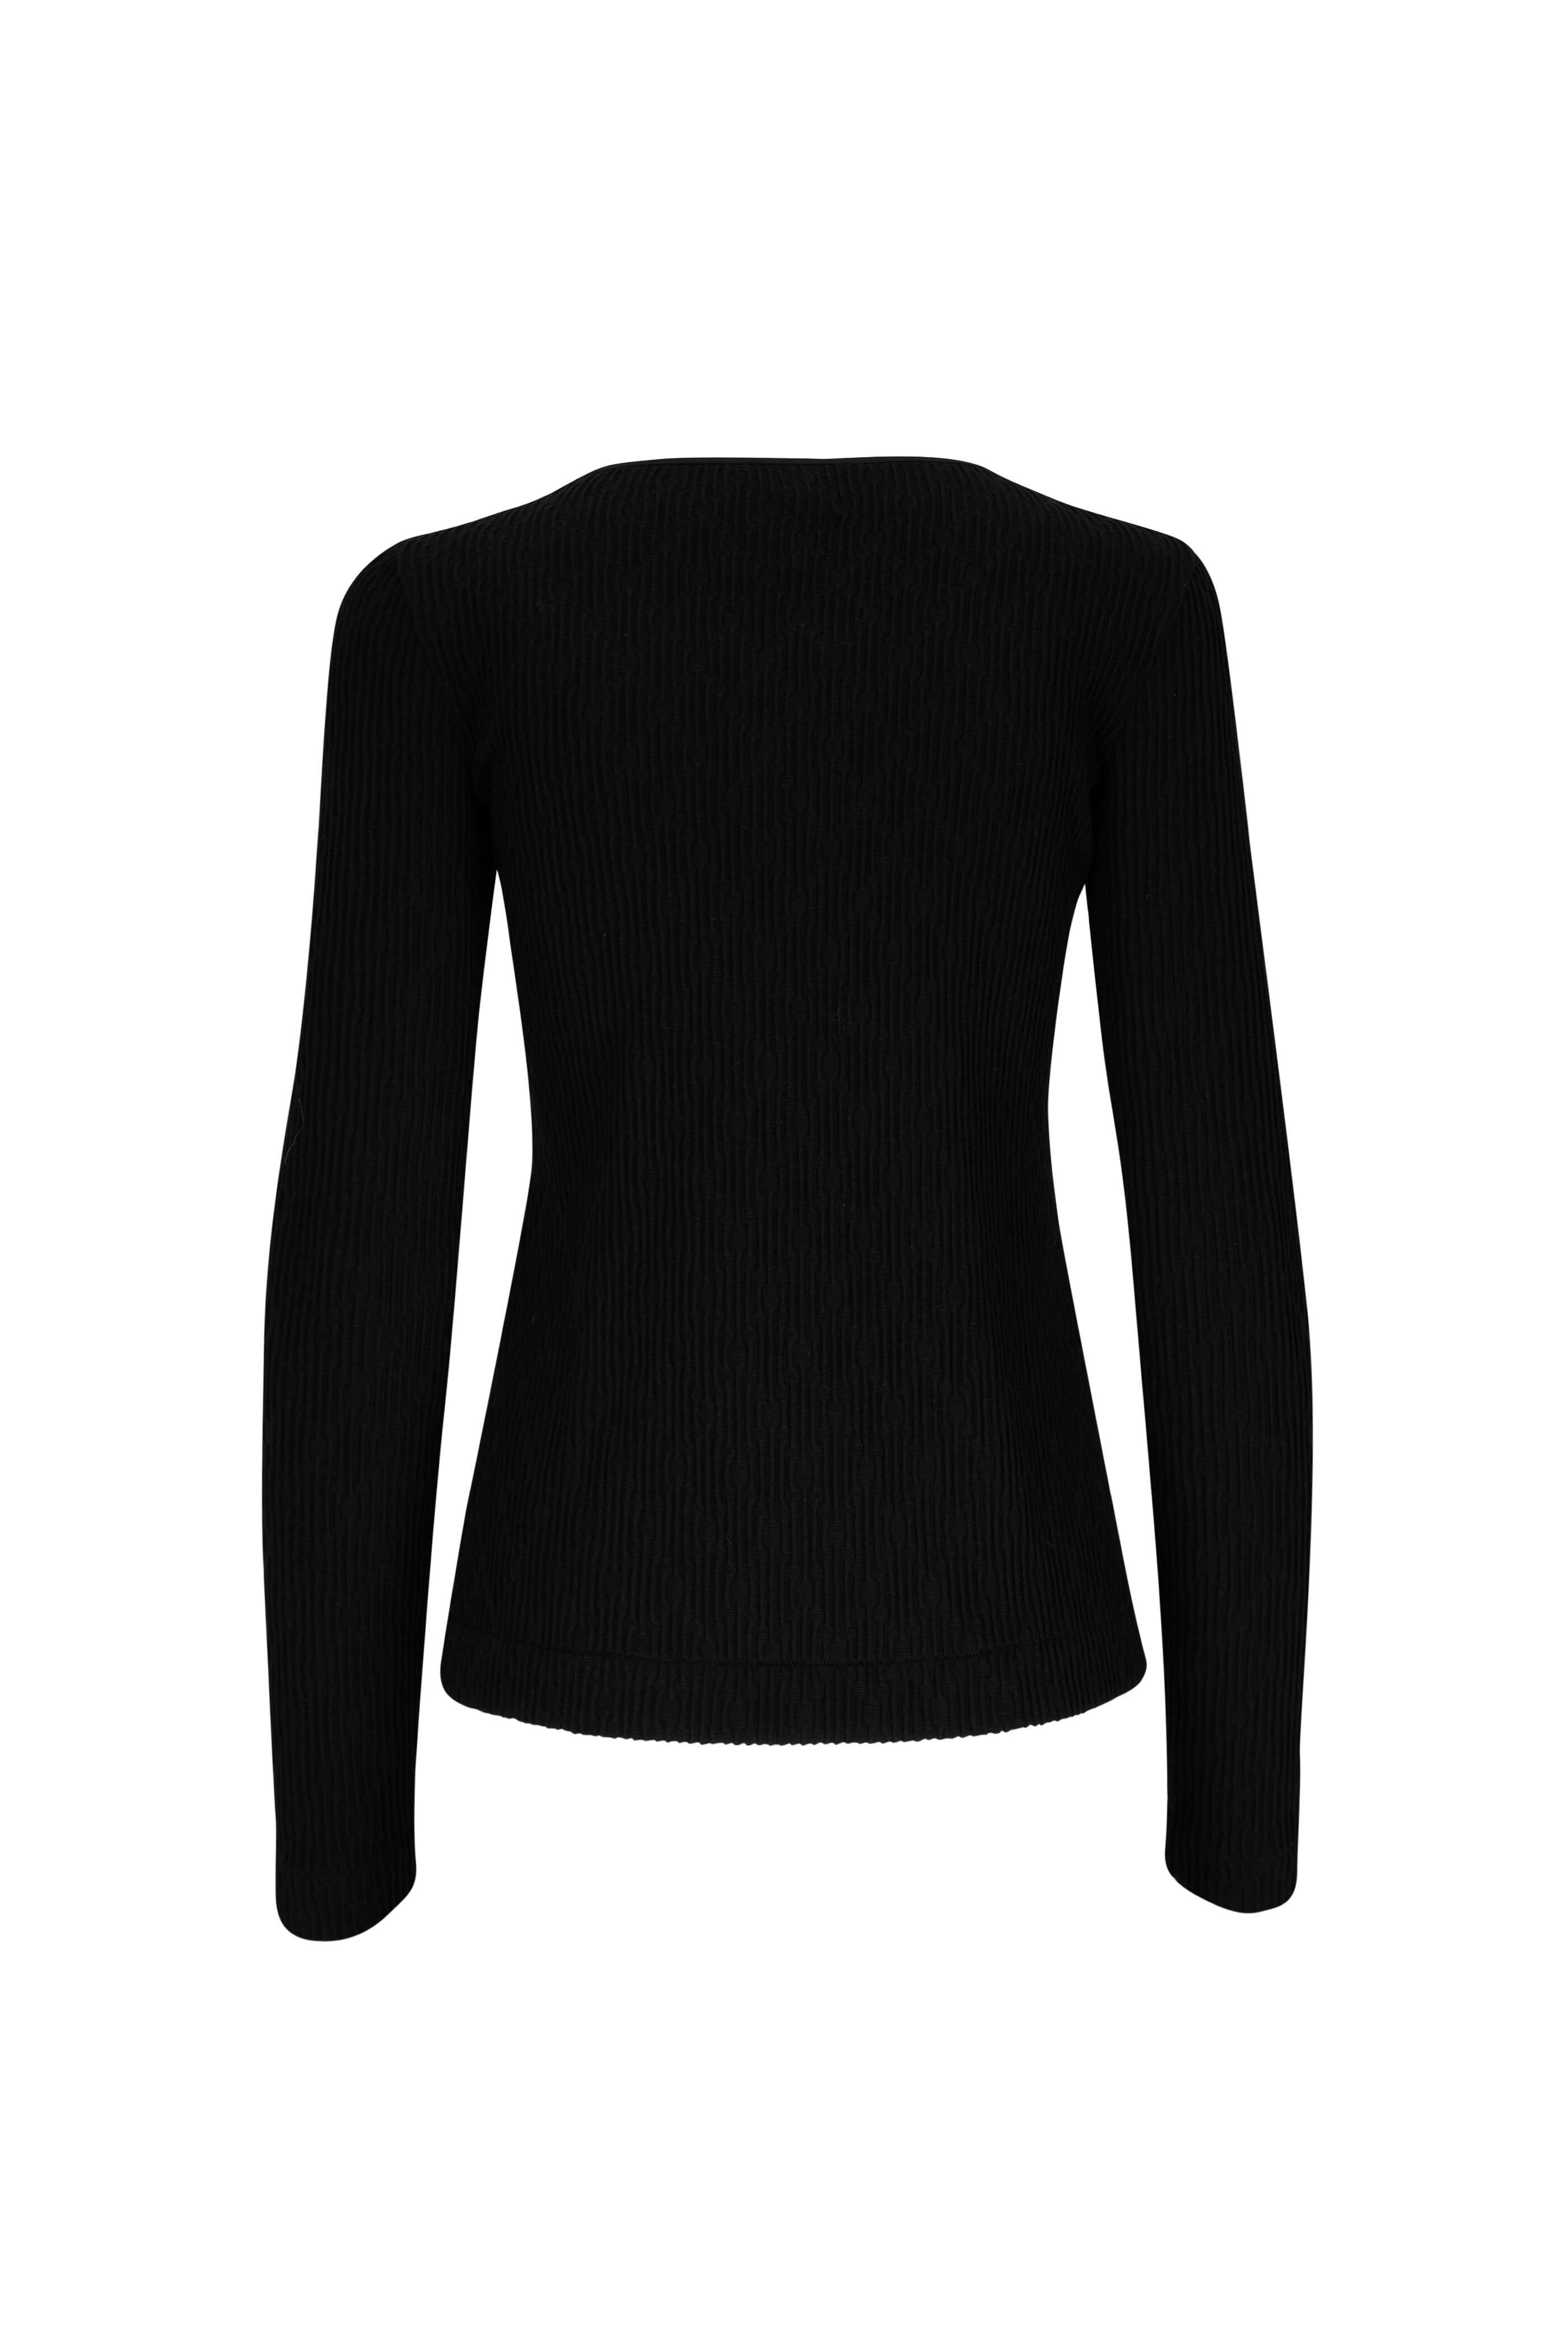 Giorgio Armani - Black Textured Jersey Jacquard Sweater